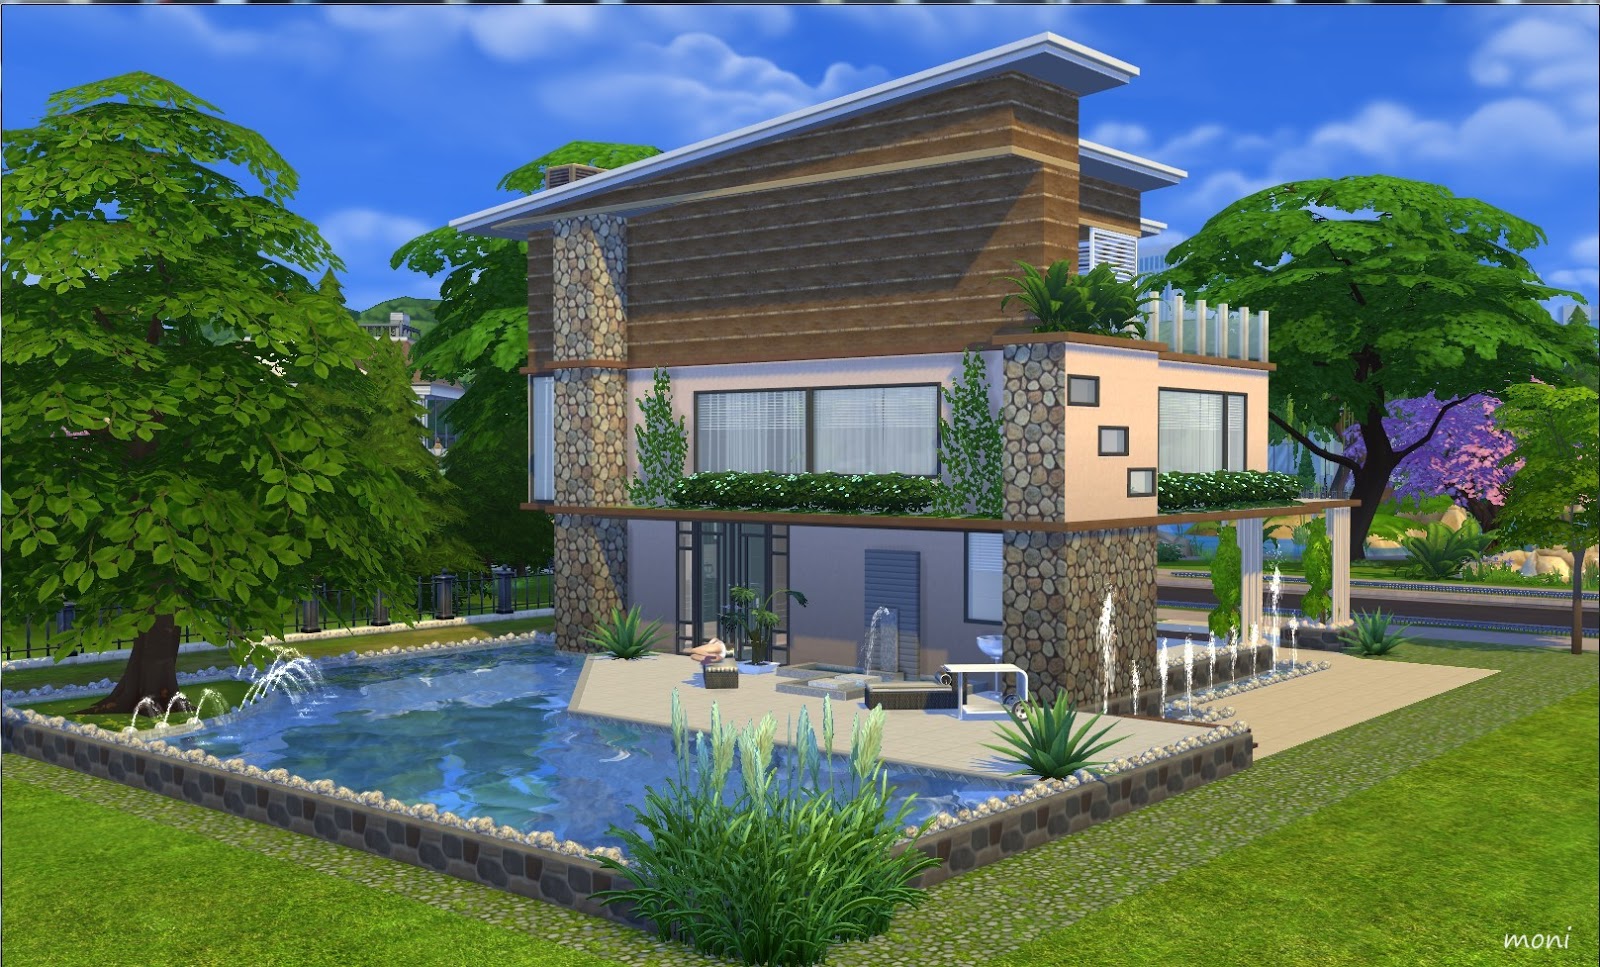 My Sims 4 Blog: Modern House No. 1 by Moni